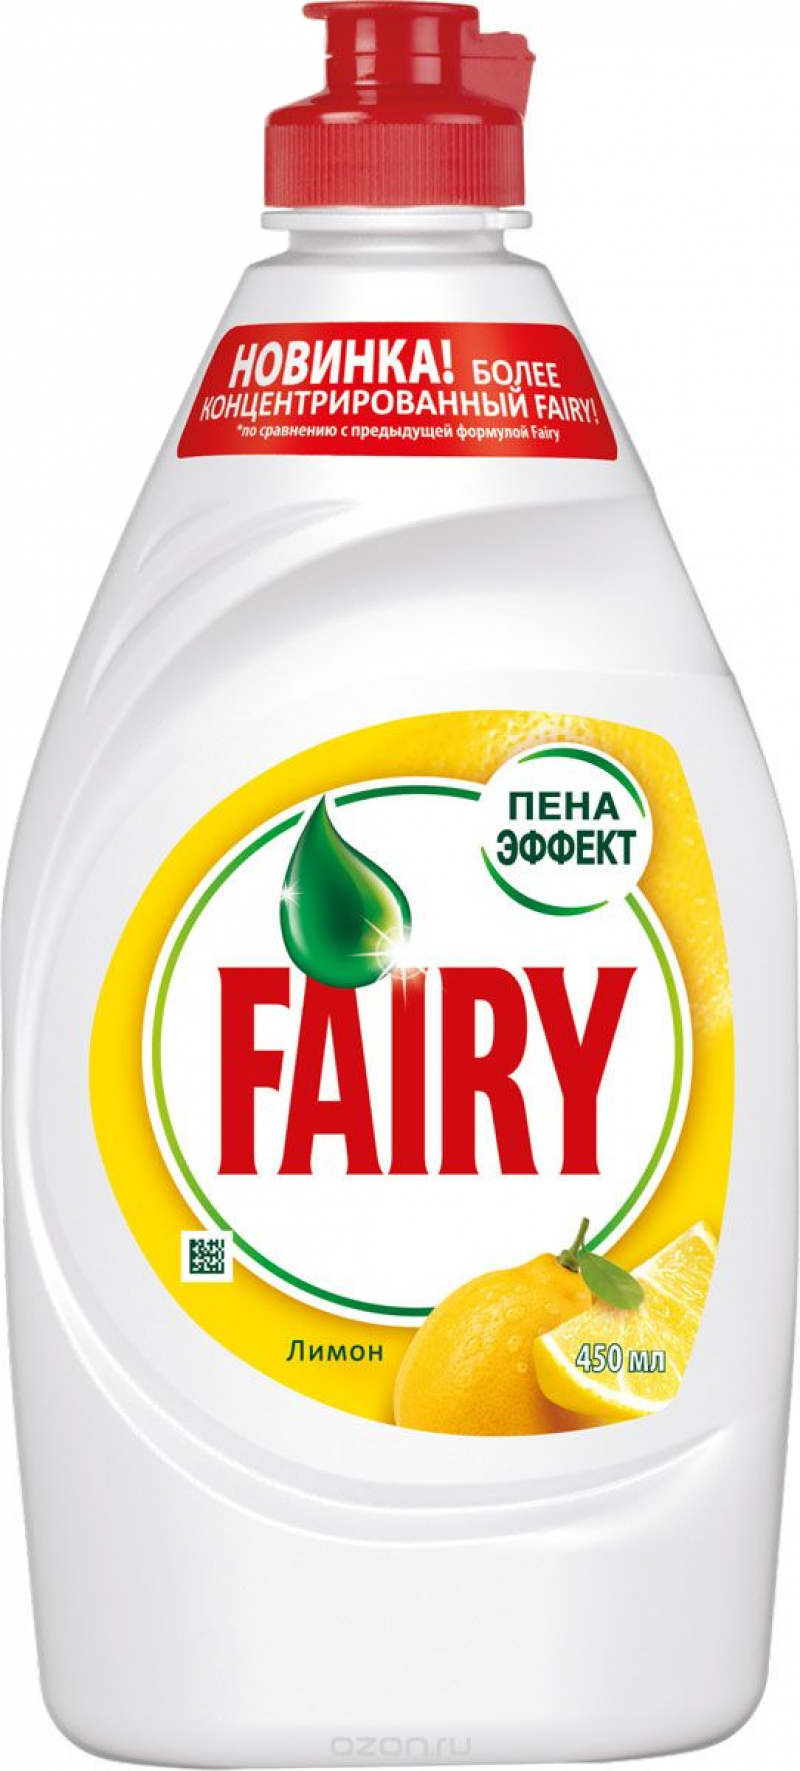 Средства для мытья посуды ТМ Fairy 450мл Лимон